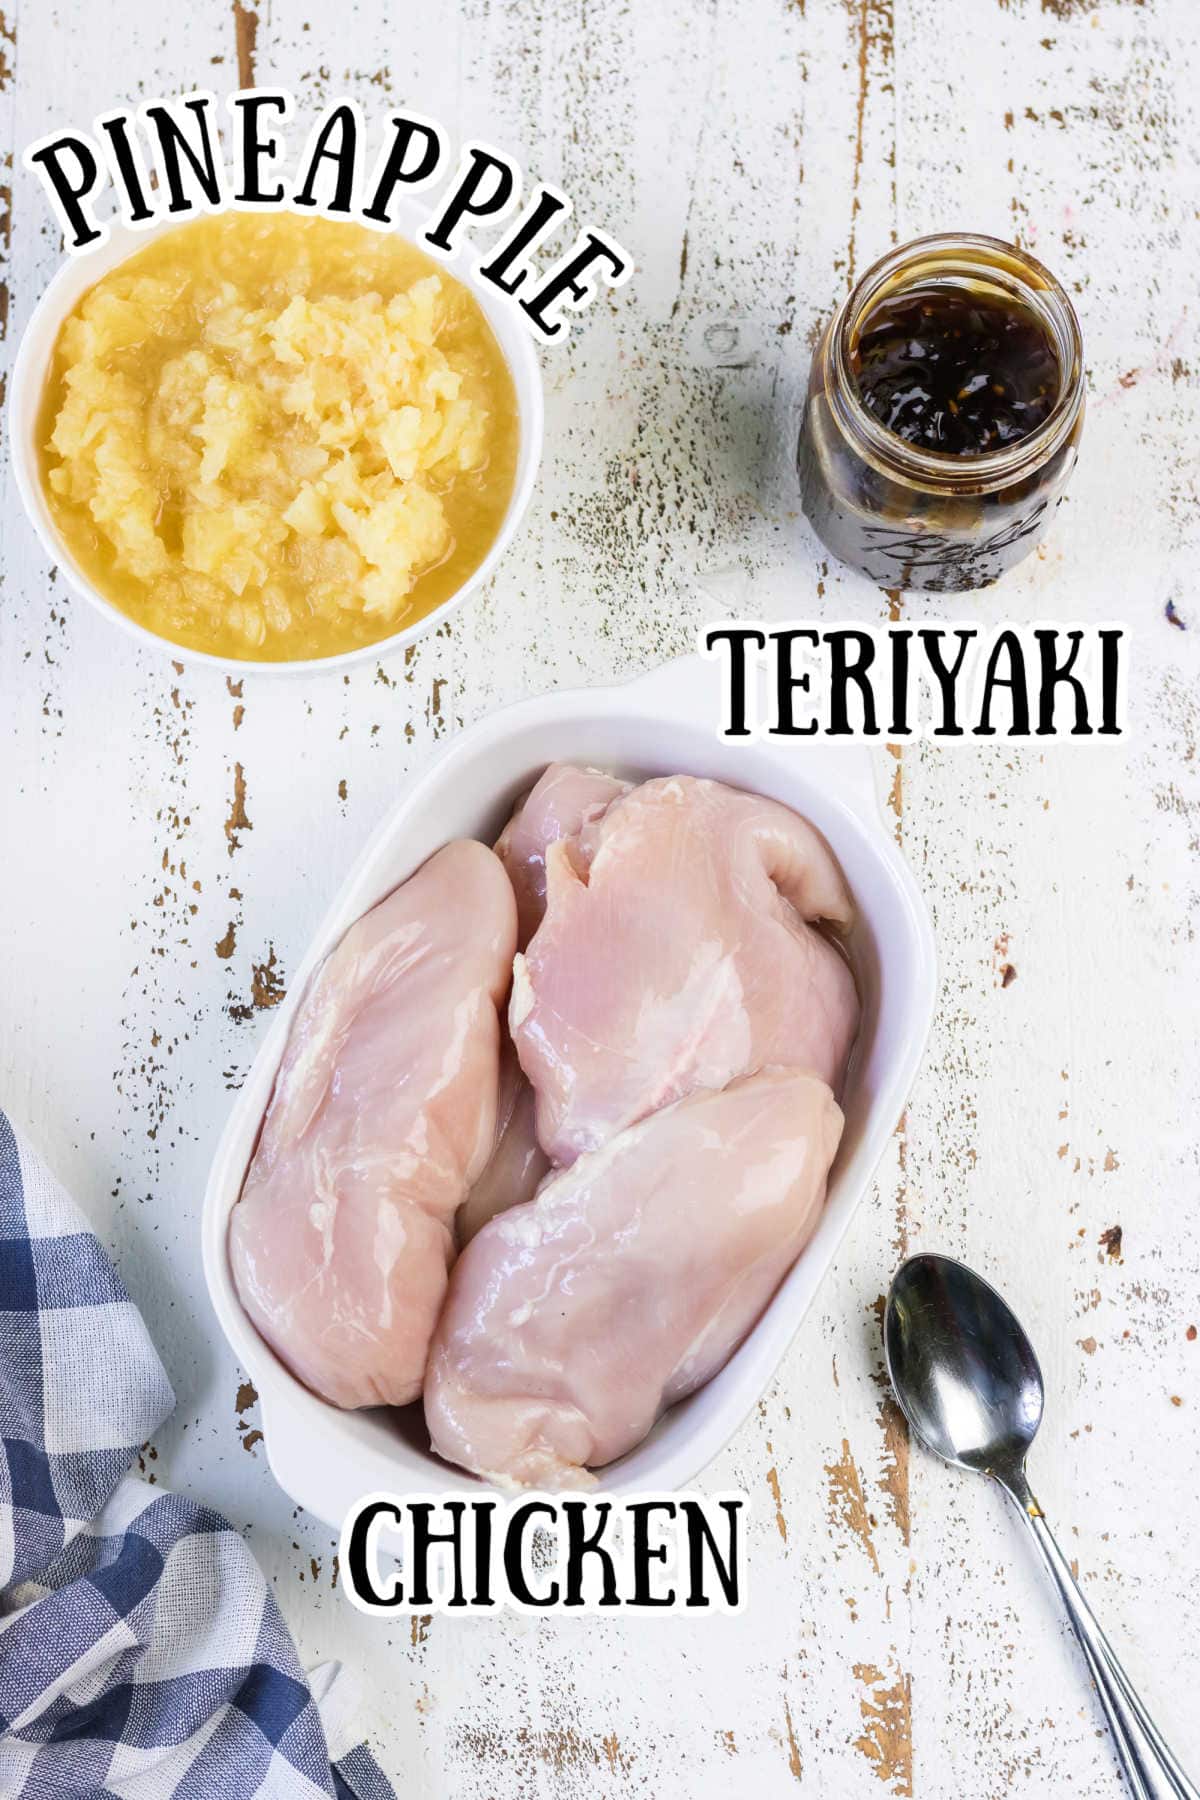 Easy Slow Cooker Pineapple Teriyaki Chicken Recipe